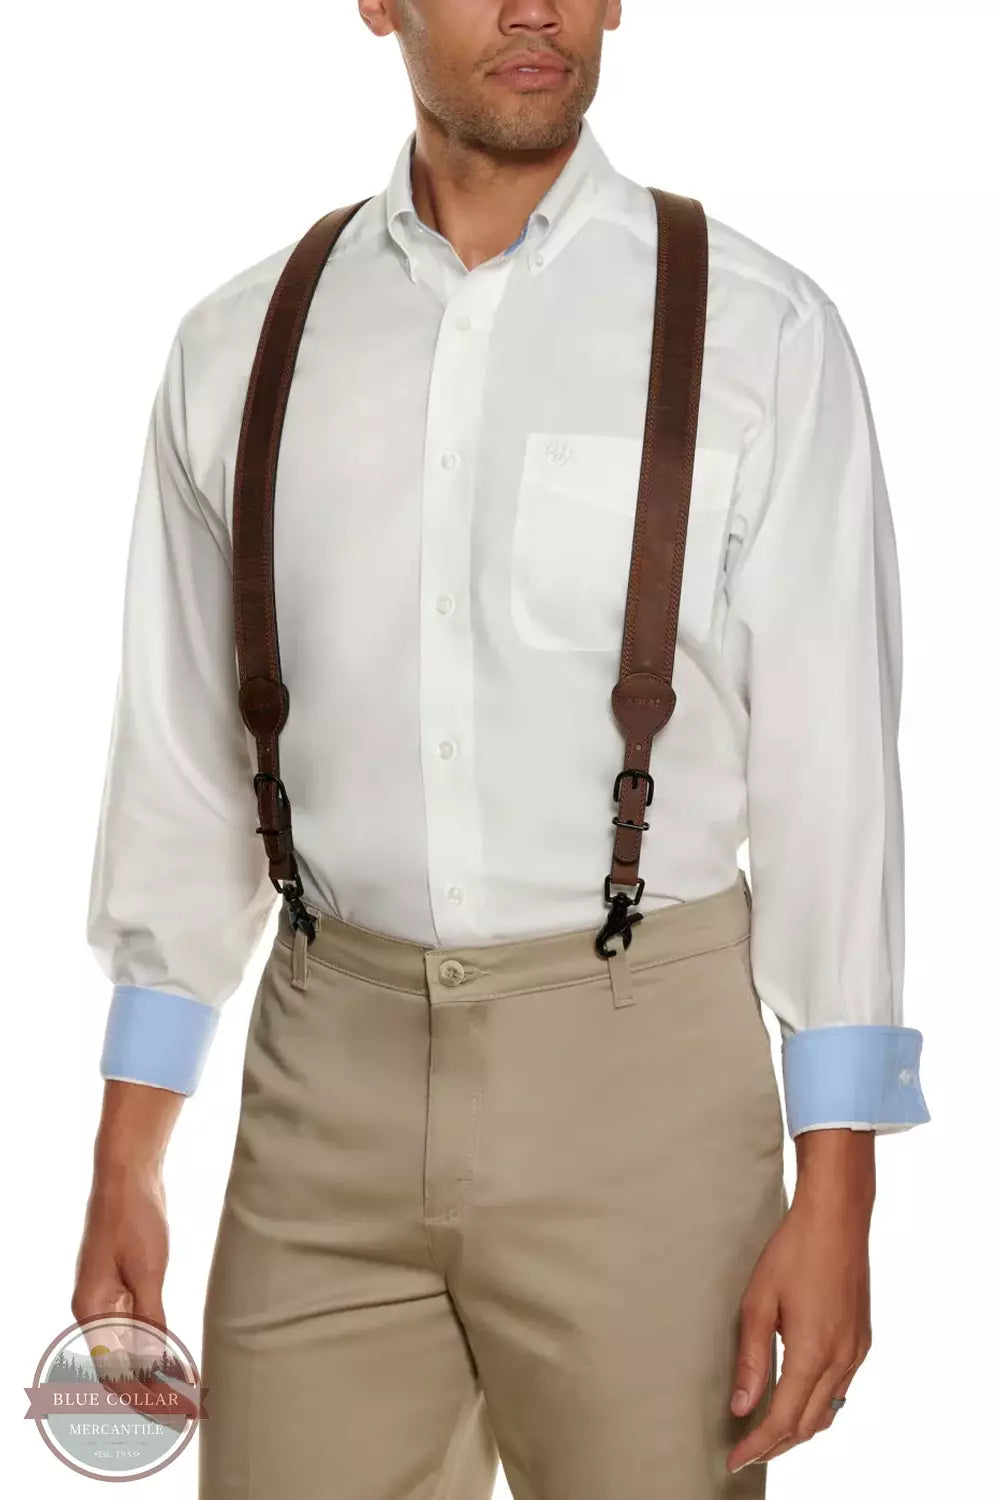 Ariat A850000144 Gallus Distressed Suspenders in Medium Brown Front View